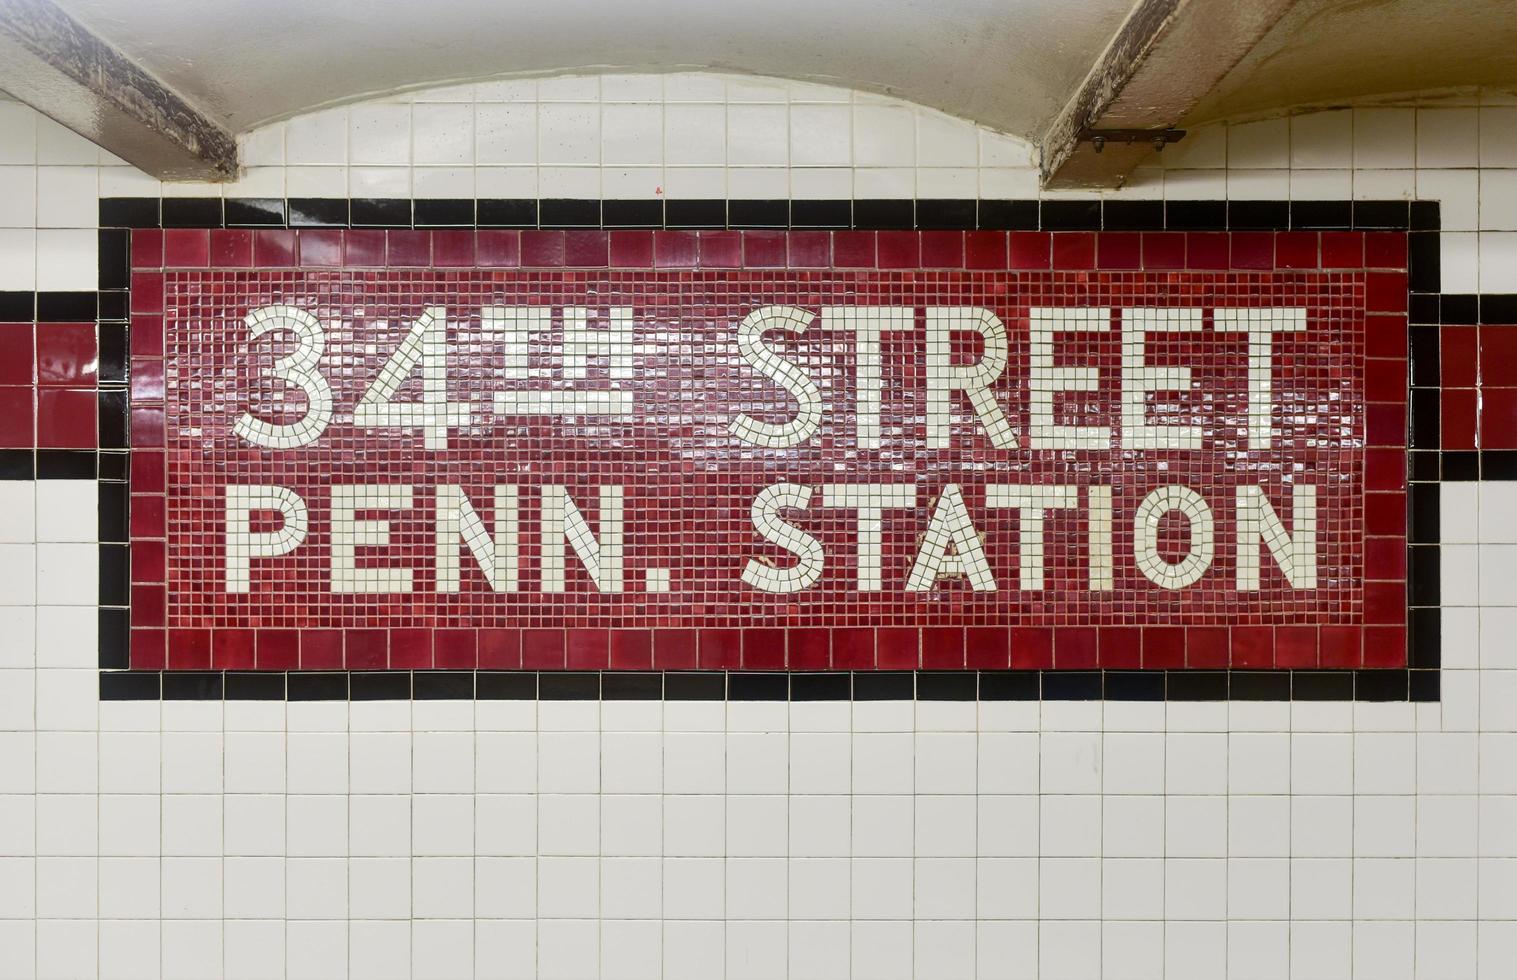 34th Street Penn. Station - New York City Subway photo